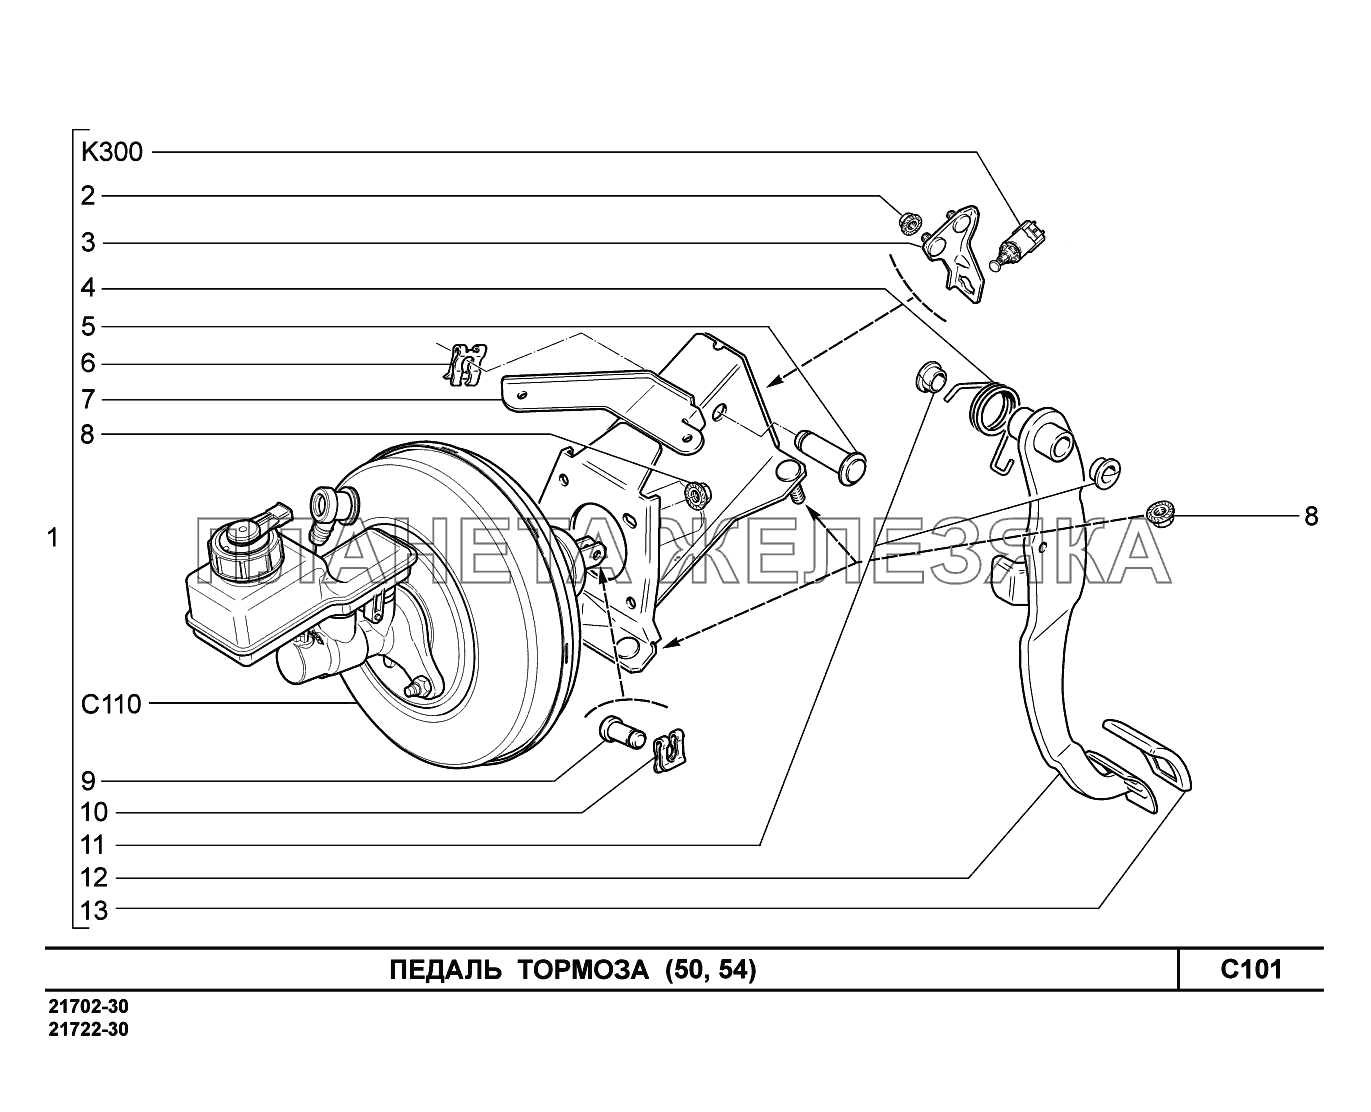 C101. Педаль тормоза ВАЗ-2170 